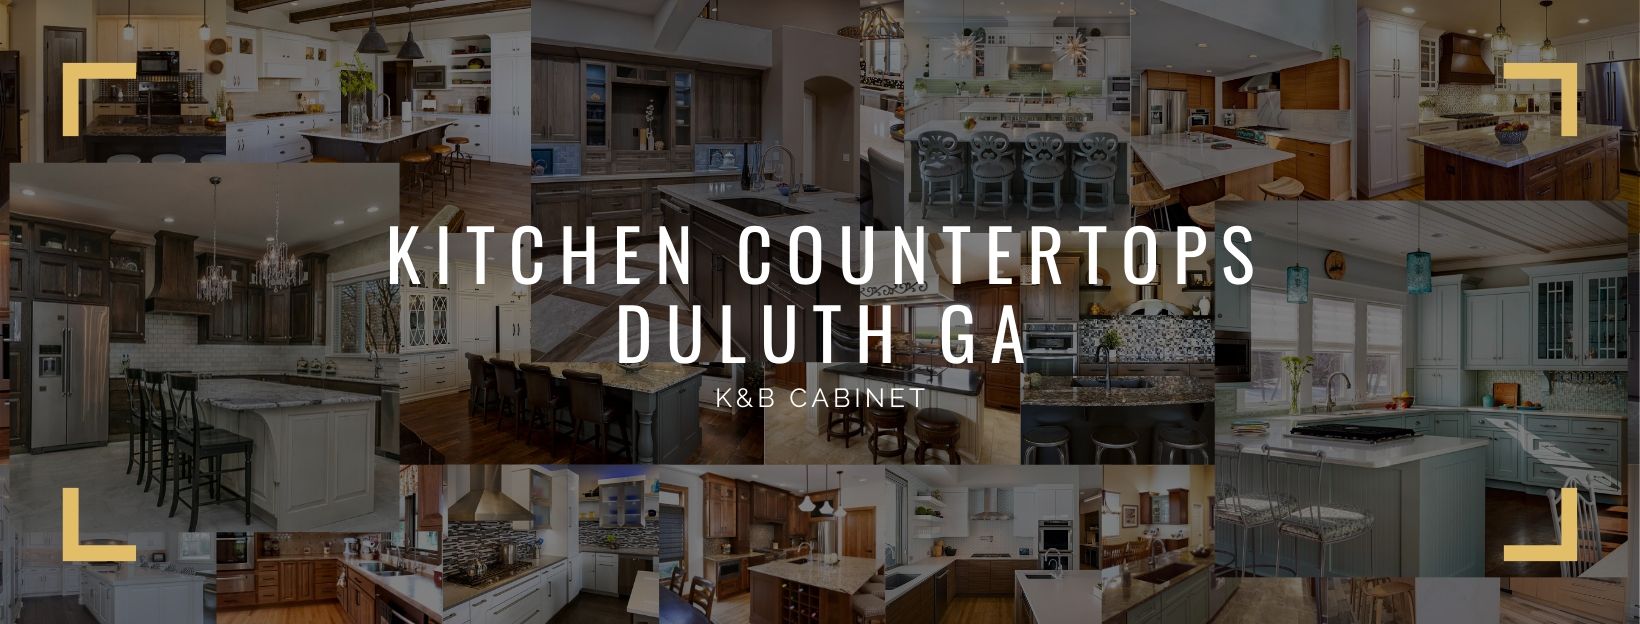 Kitchen Countertops Duluth GA